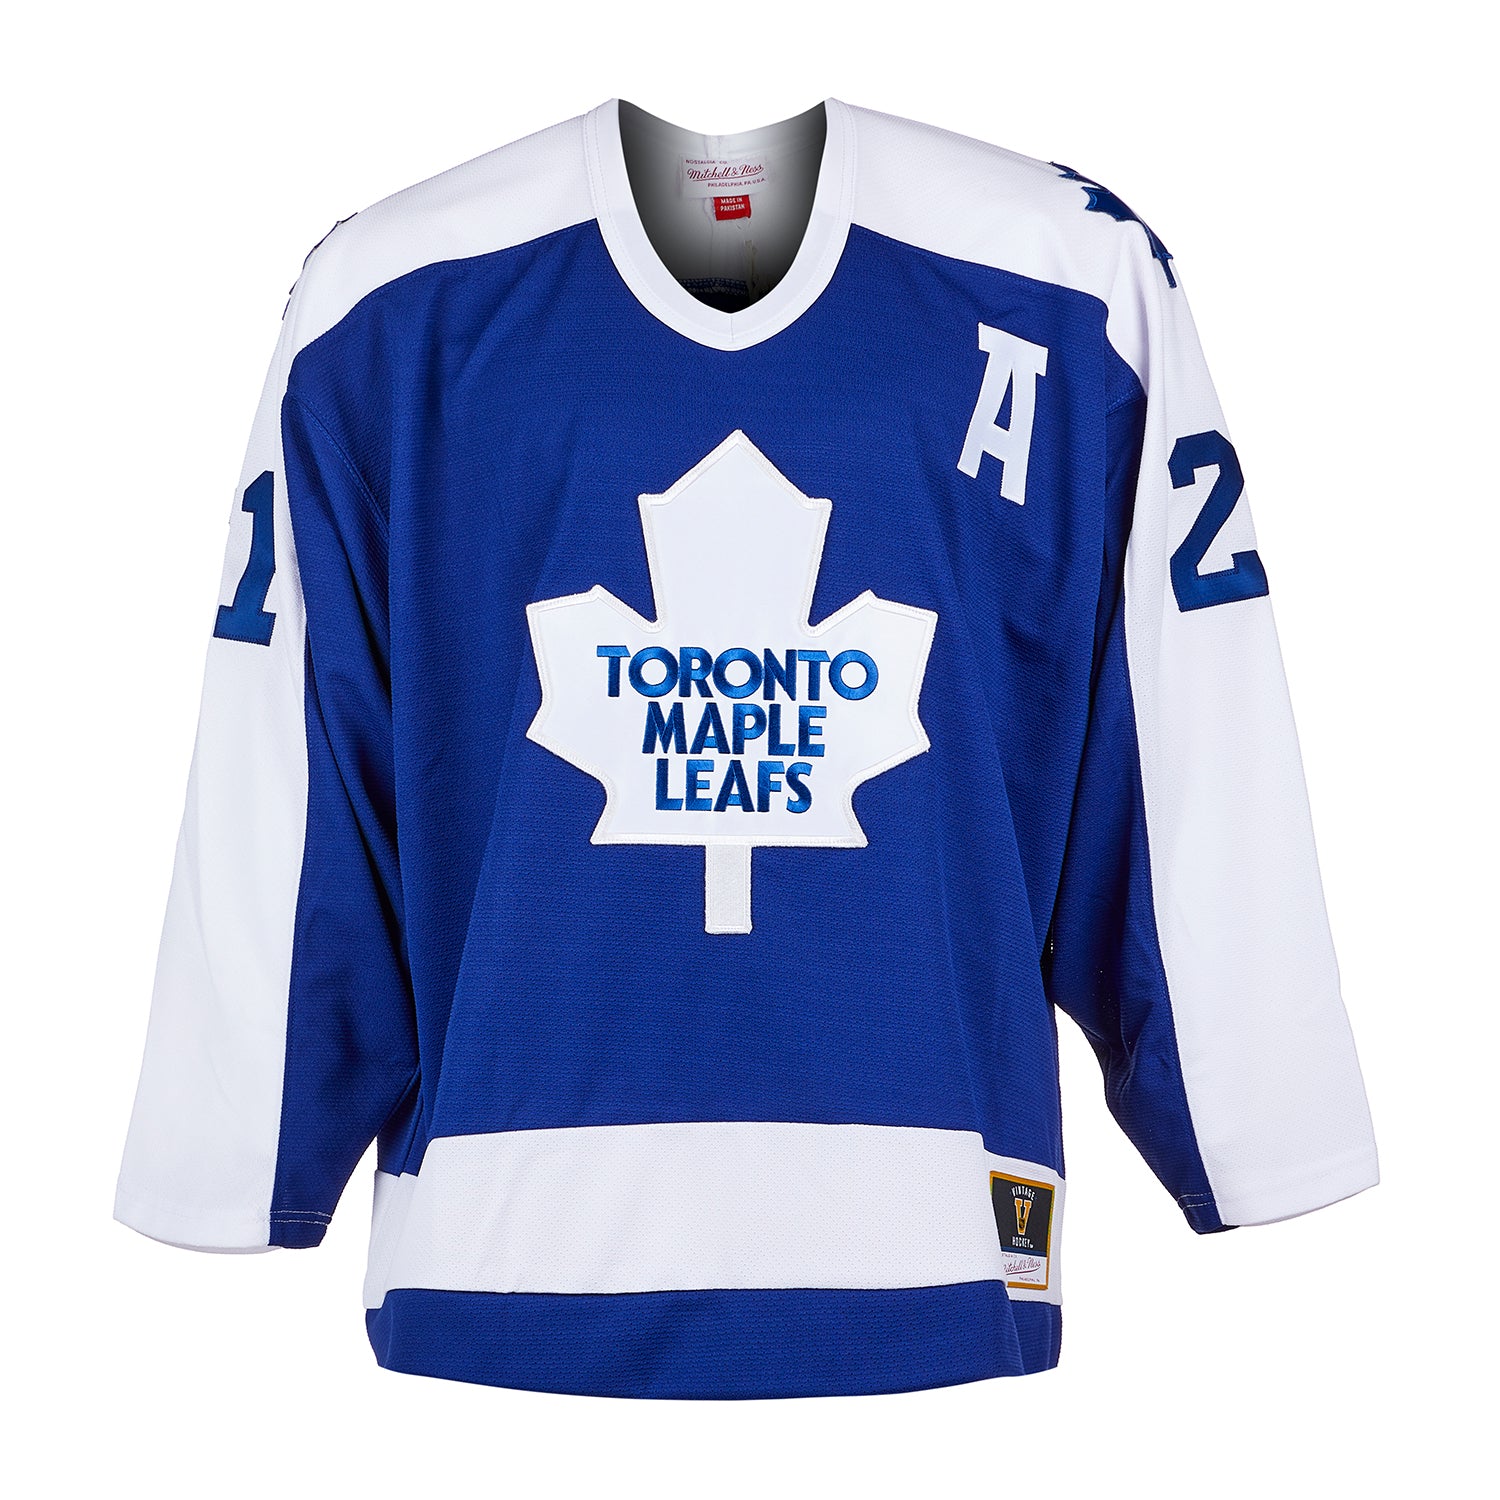 BORJE SALMING Toronto Maple Leafs autographed 8x10 photo